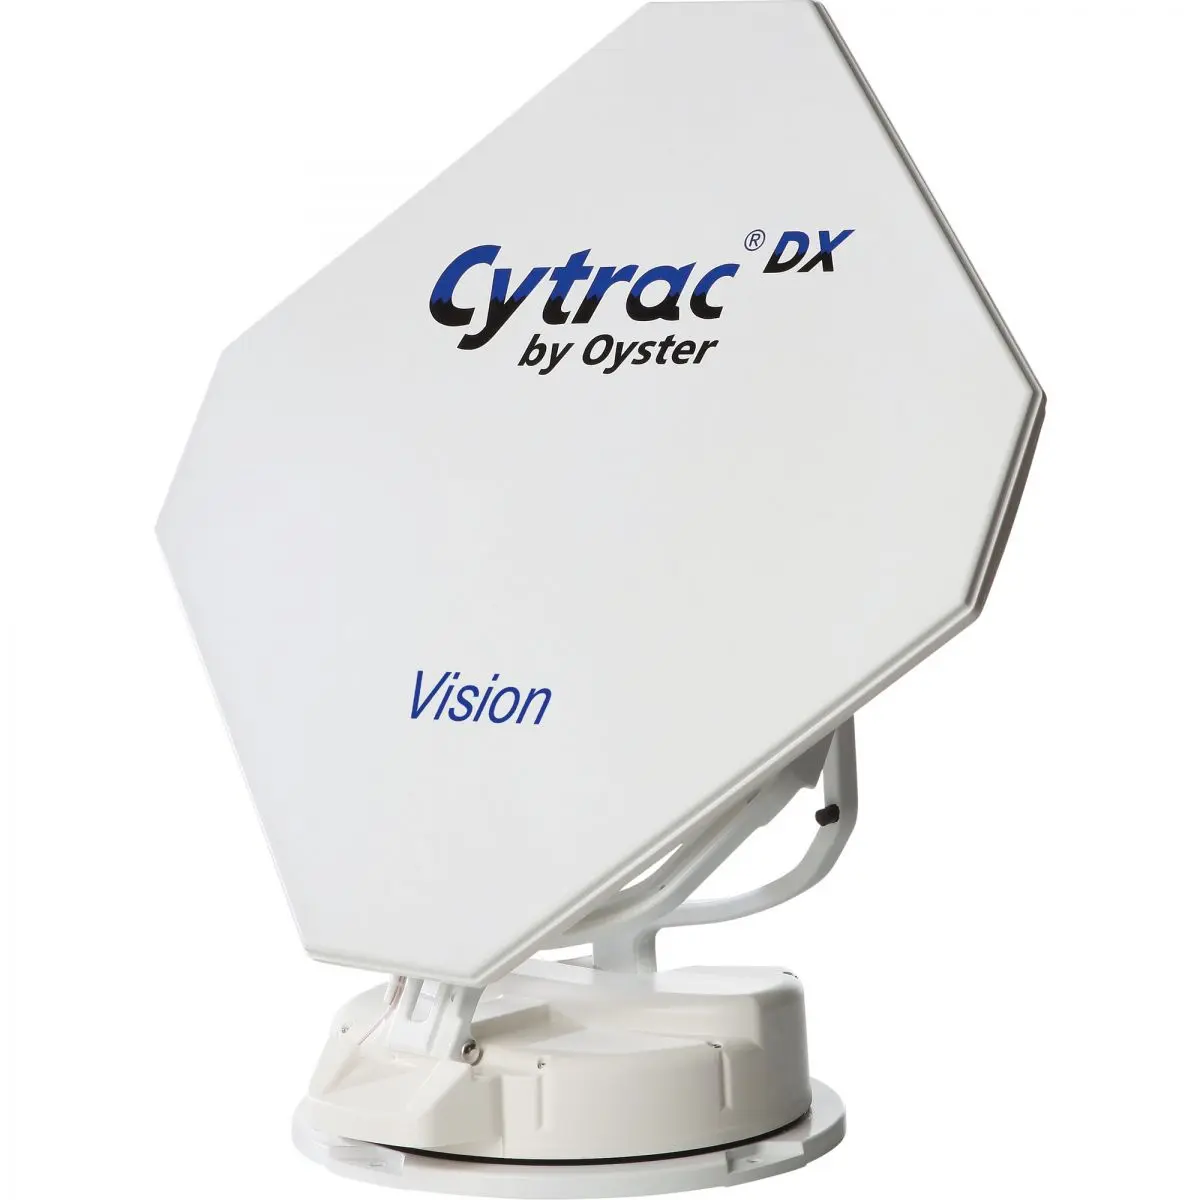 Cytrac DX Vision Single műholdrendszer